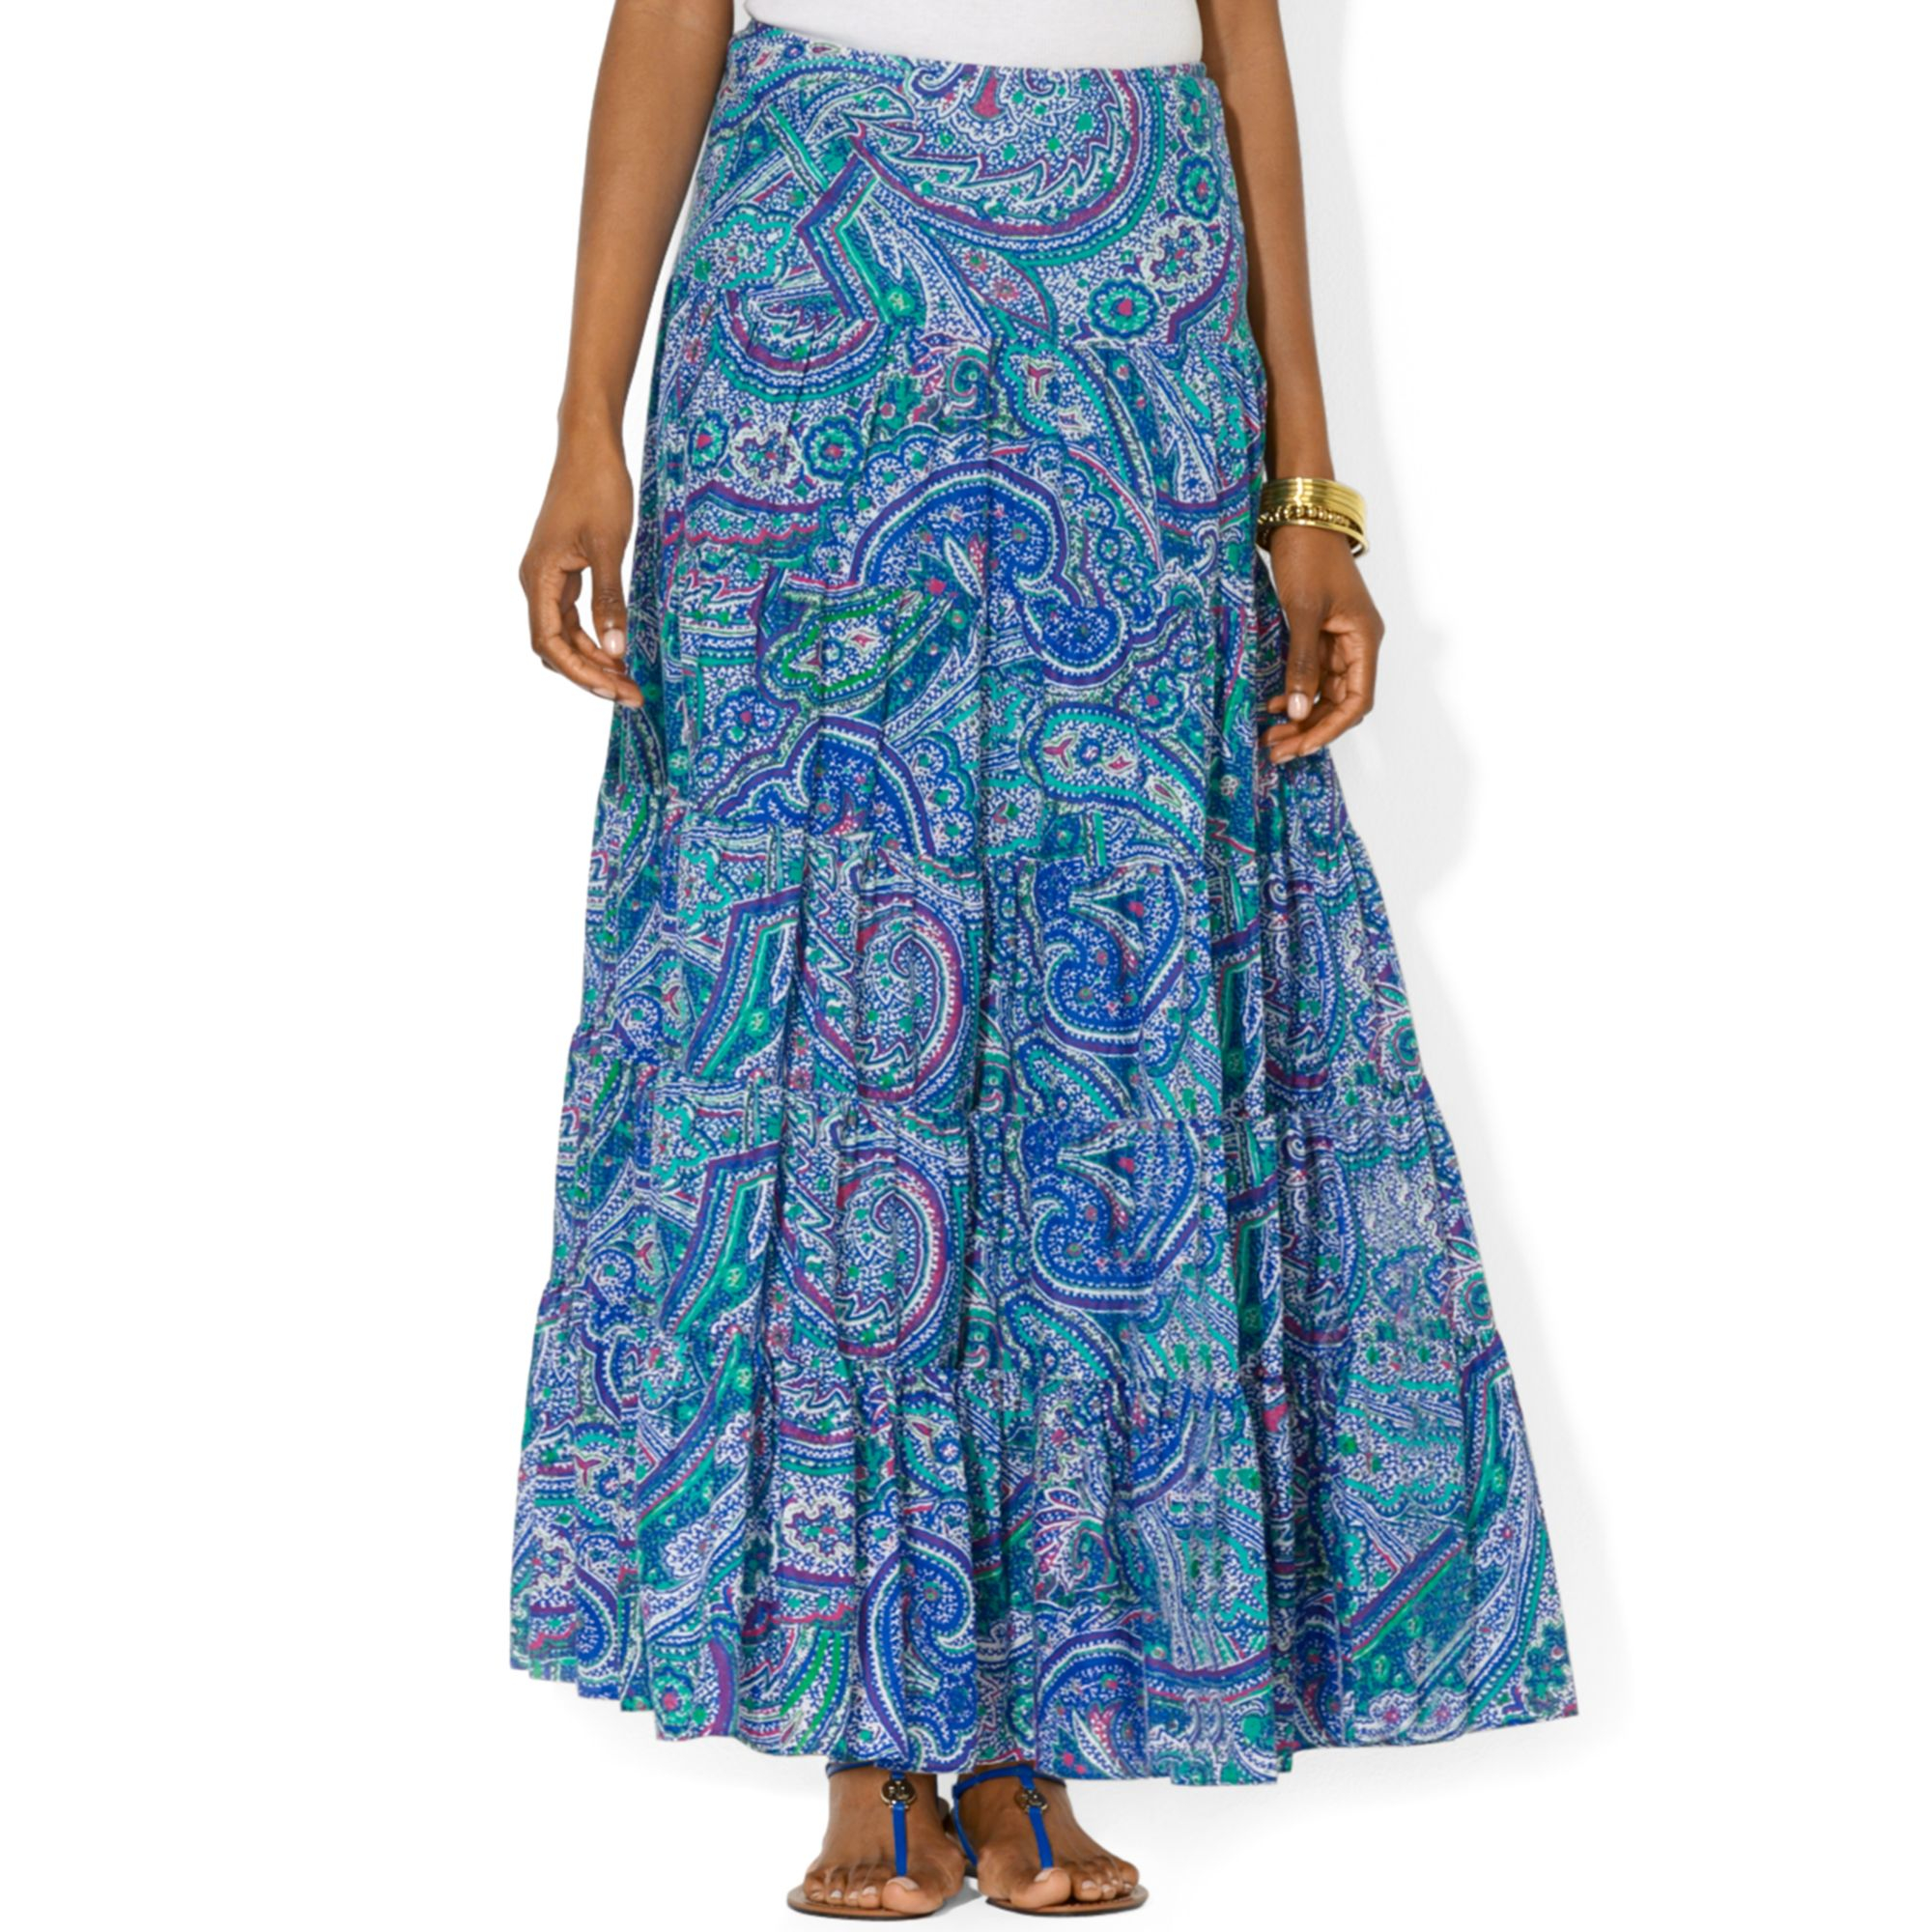 Lauren by Ralph Lauren Tiered Paisleyprint Maxi Skirt in Blue - Lyst